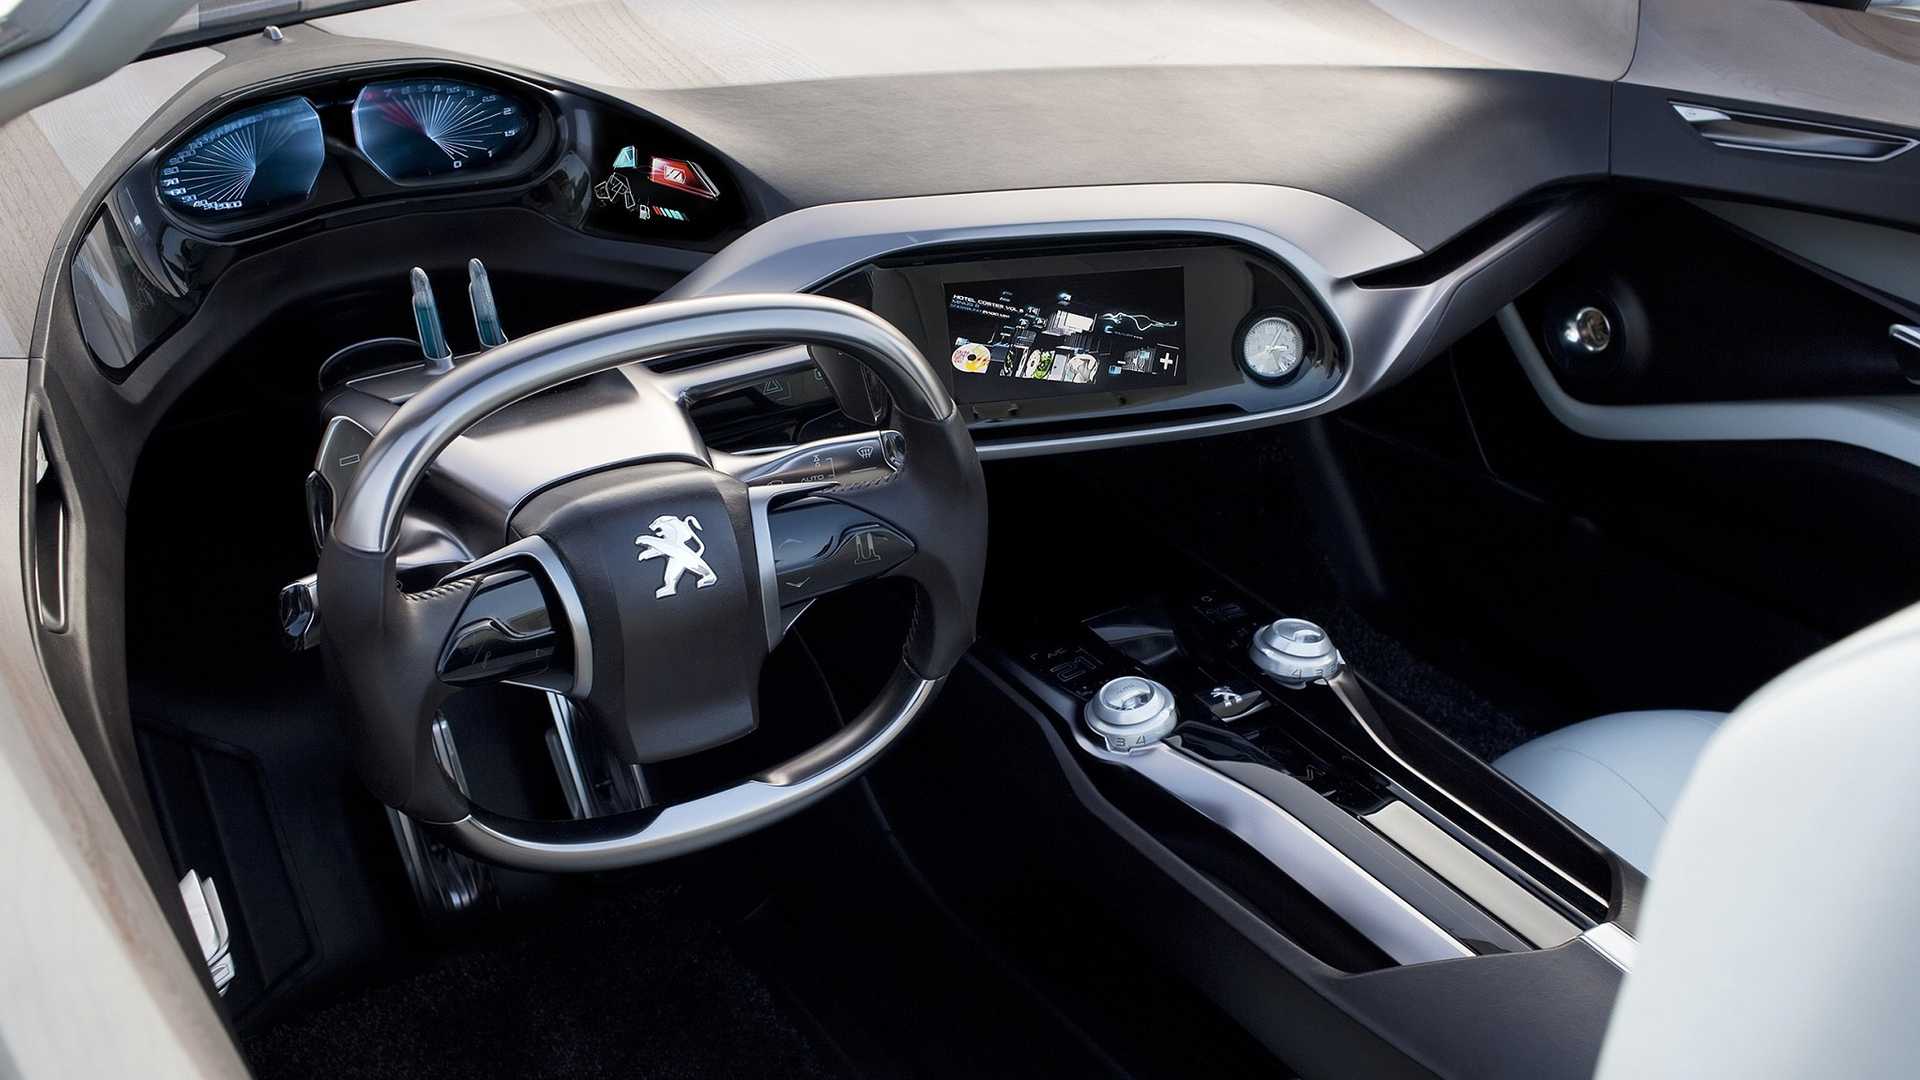 Peugeot i-cockpit